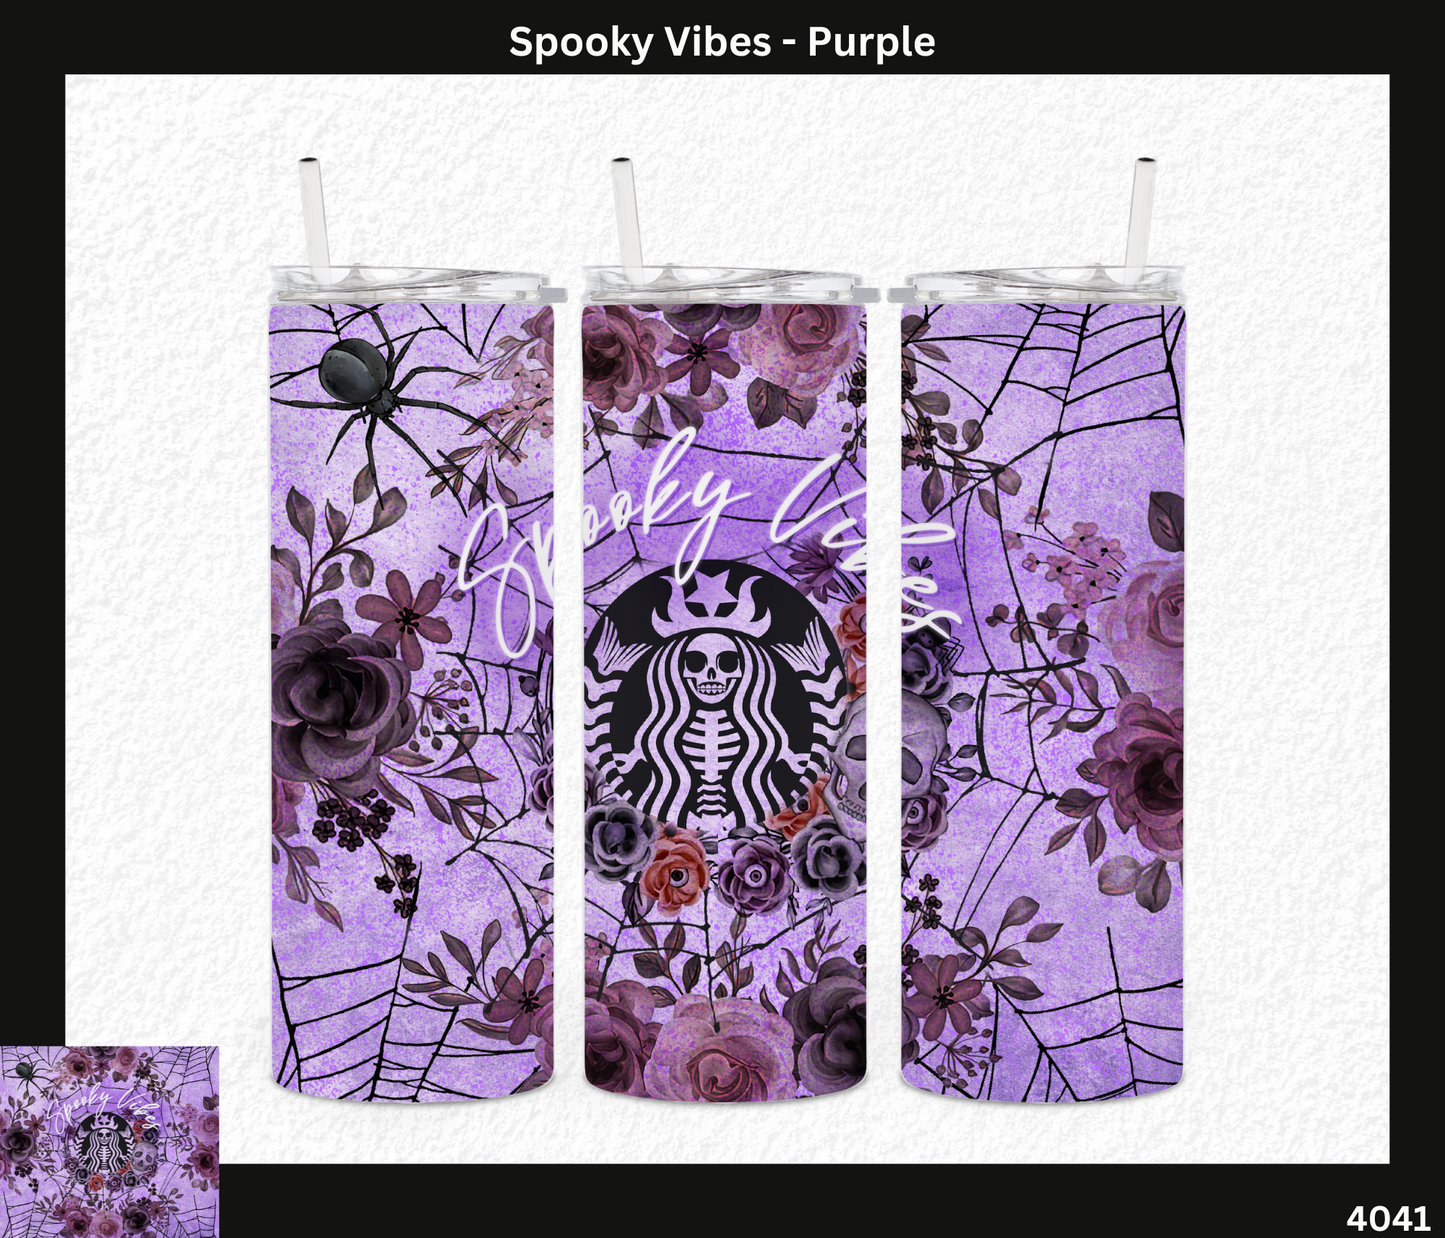 Spooky Vibes - Purple